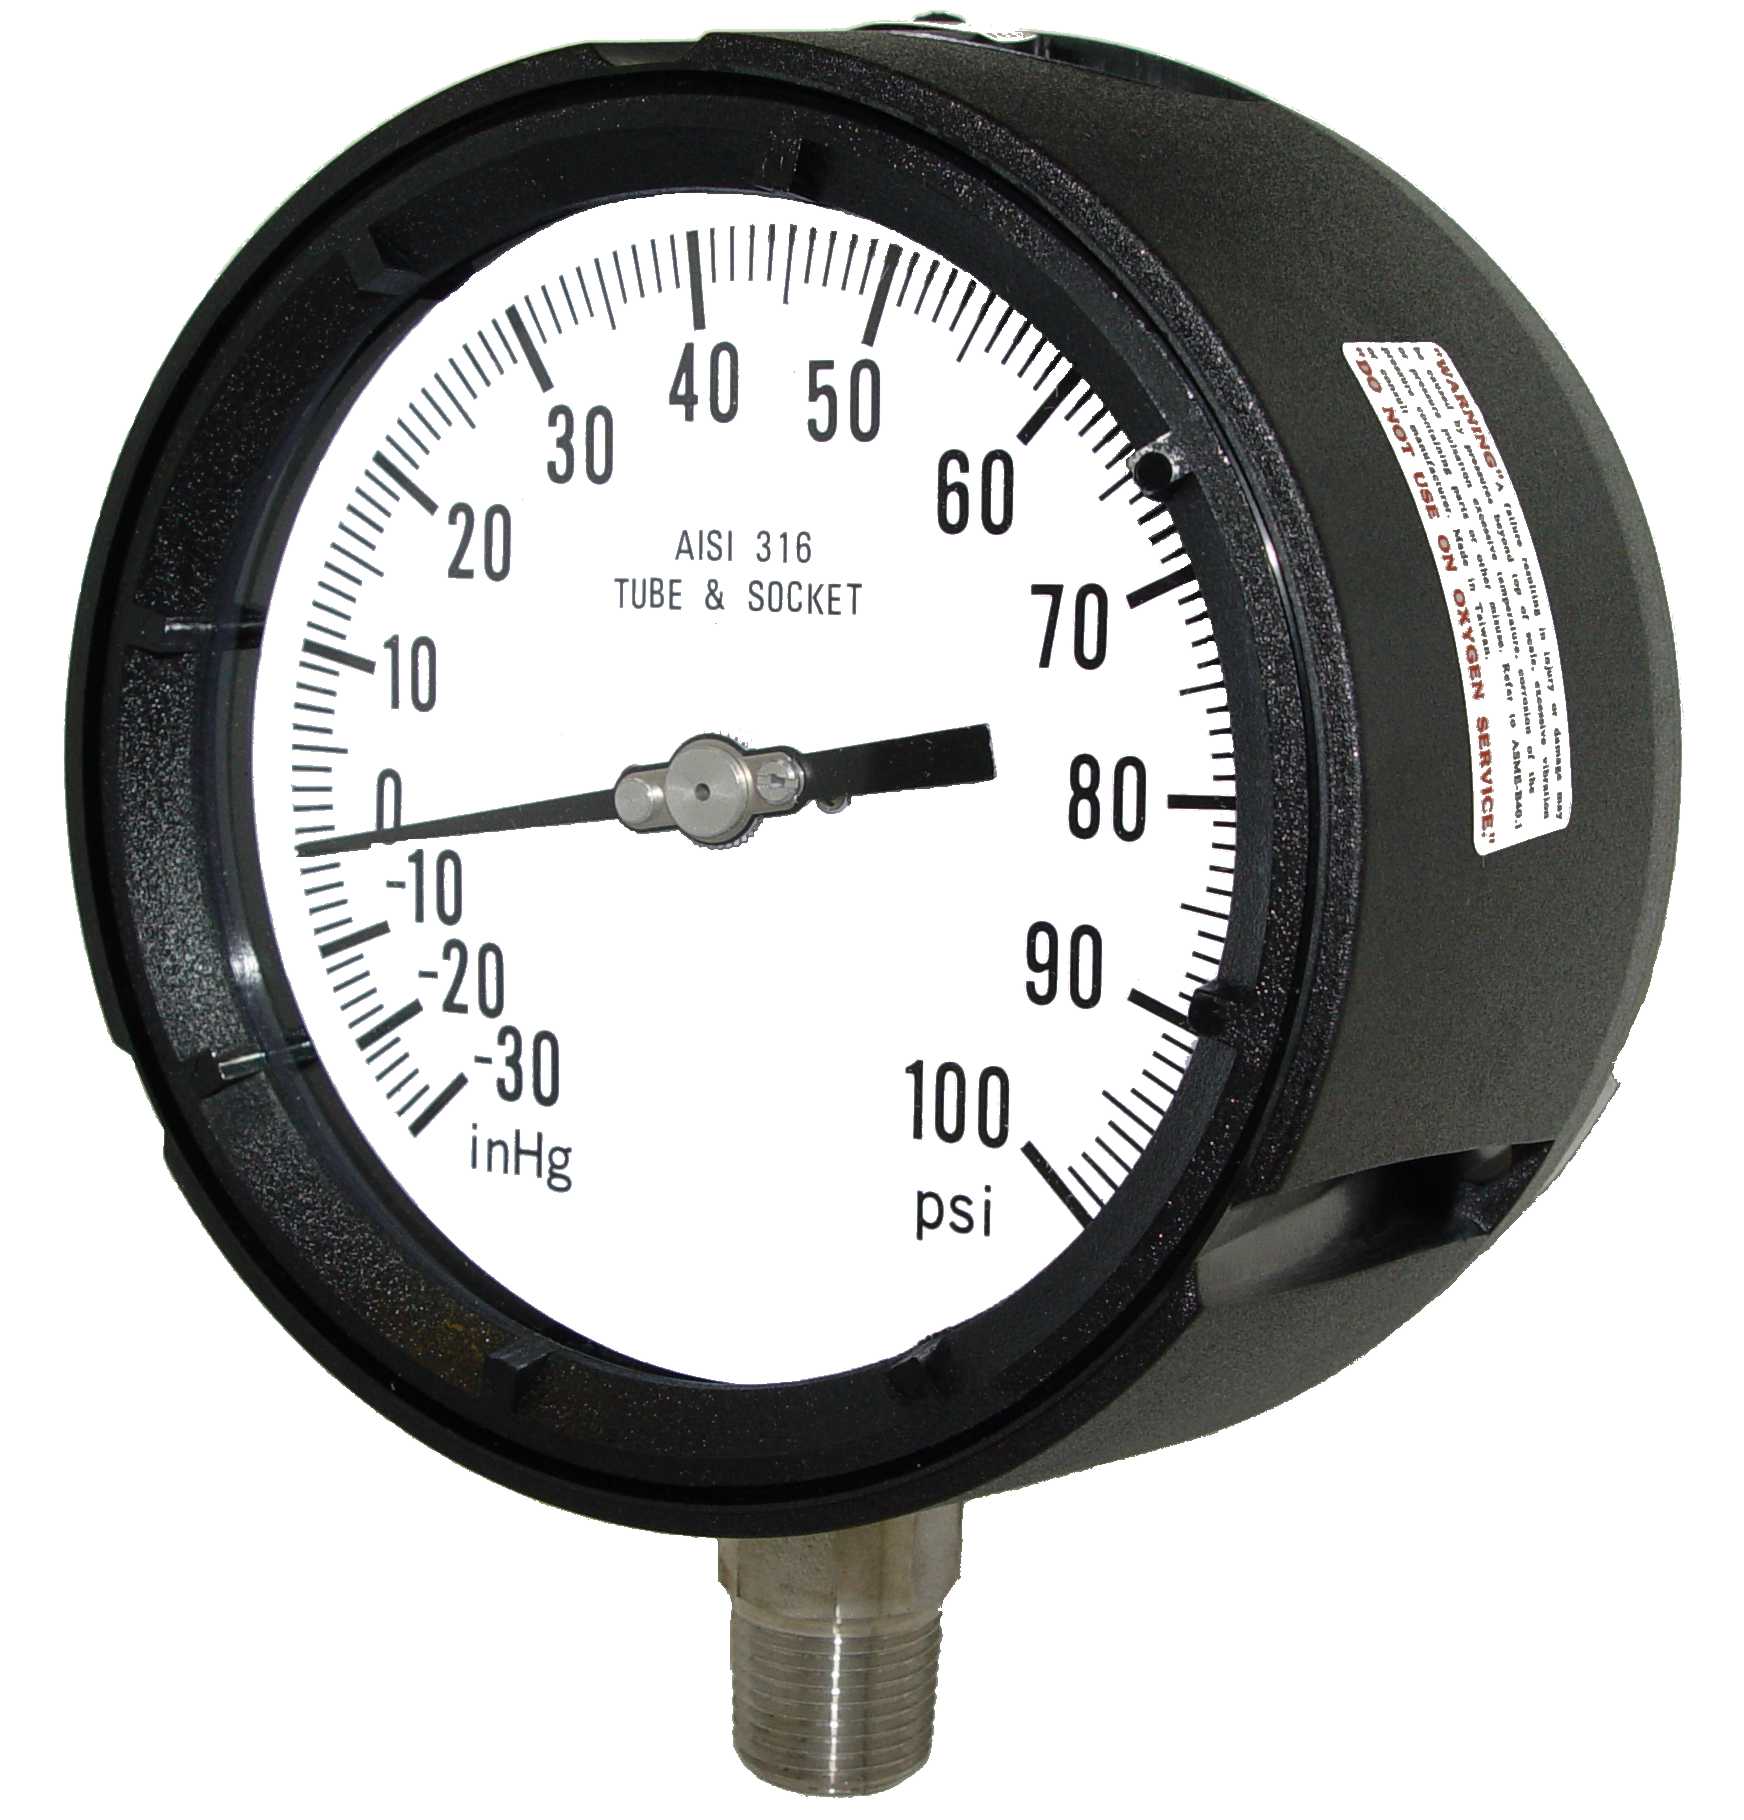 Model 4501-452H gauge, 4.5 dial, 1/2 mount, 0-300 PSI